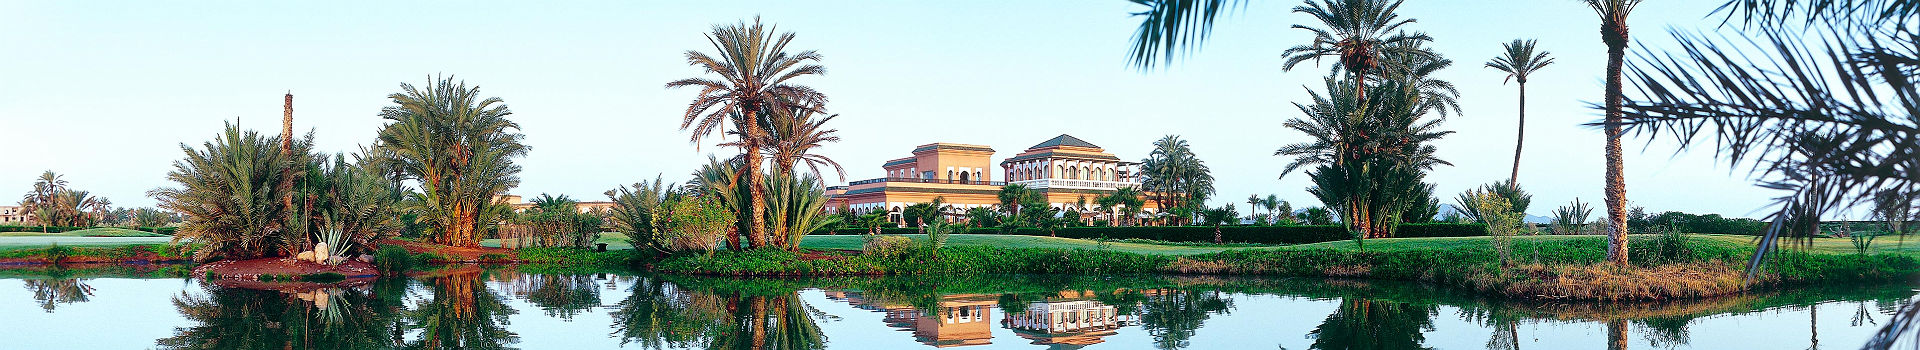 Palmeraie Golf Palace - Marrakech - Maroc